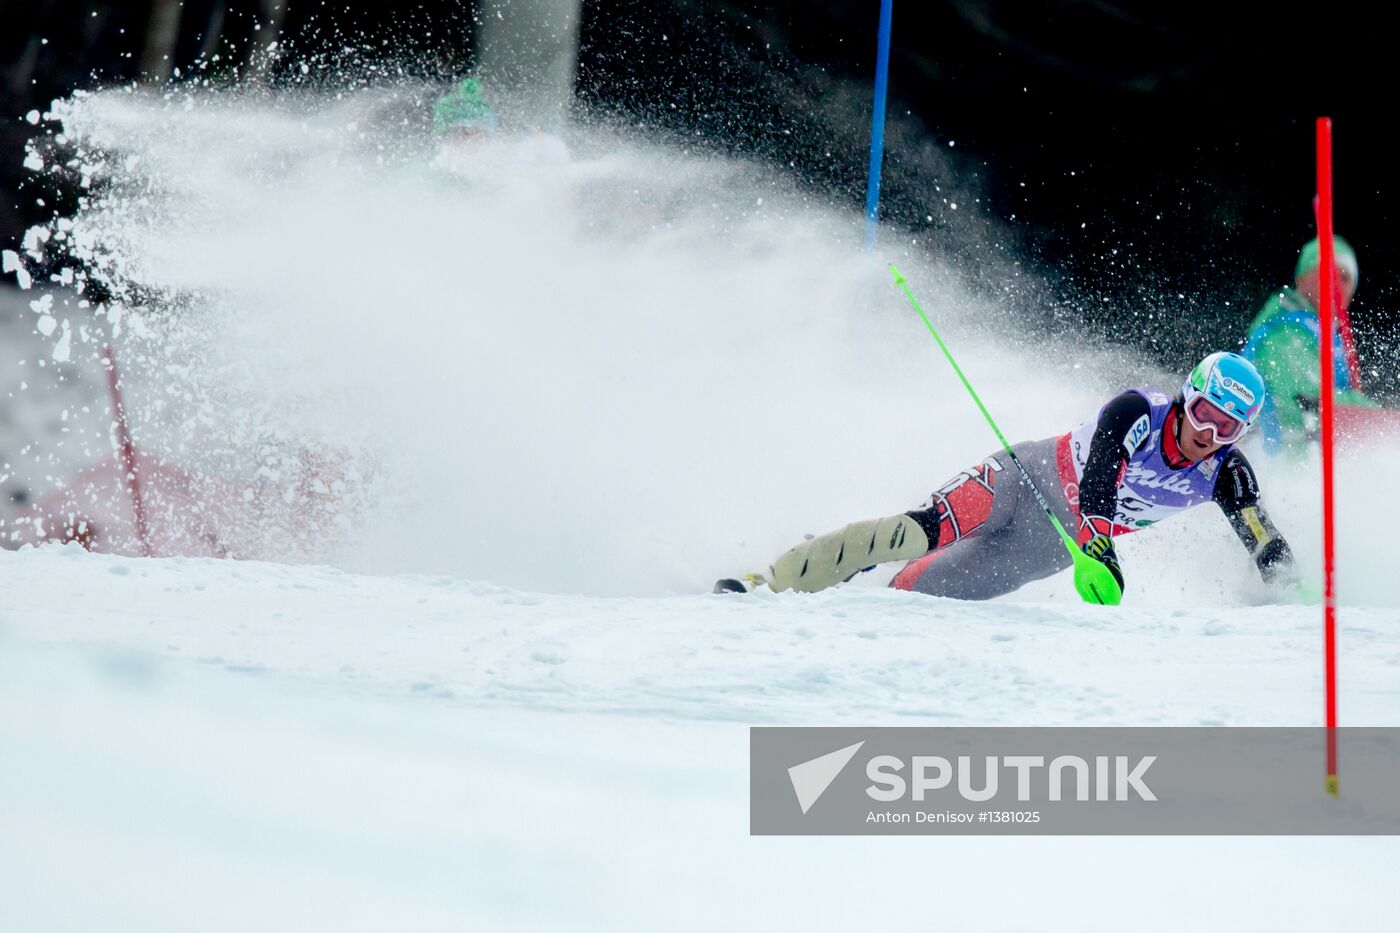 FIS Alpine World Ski Championships. Men's slalom